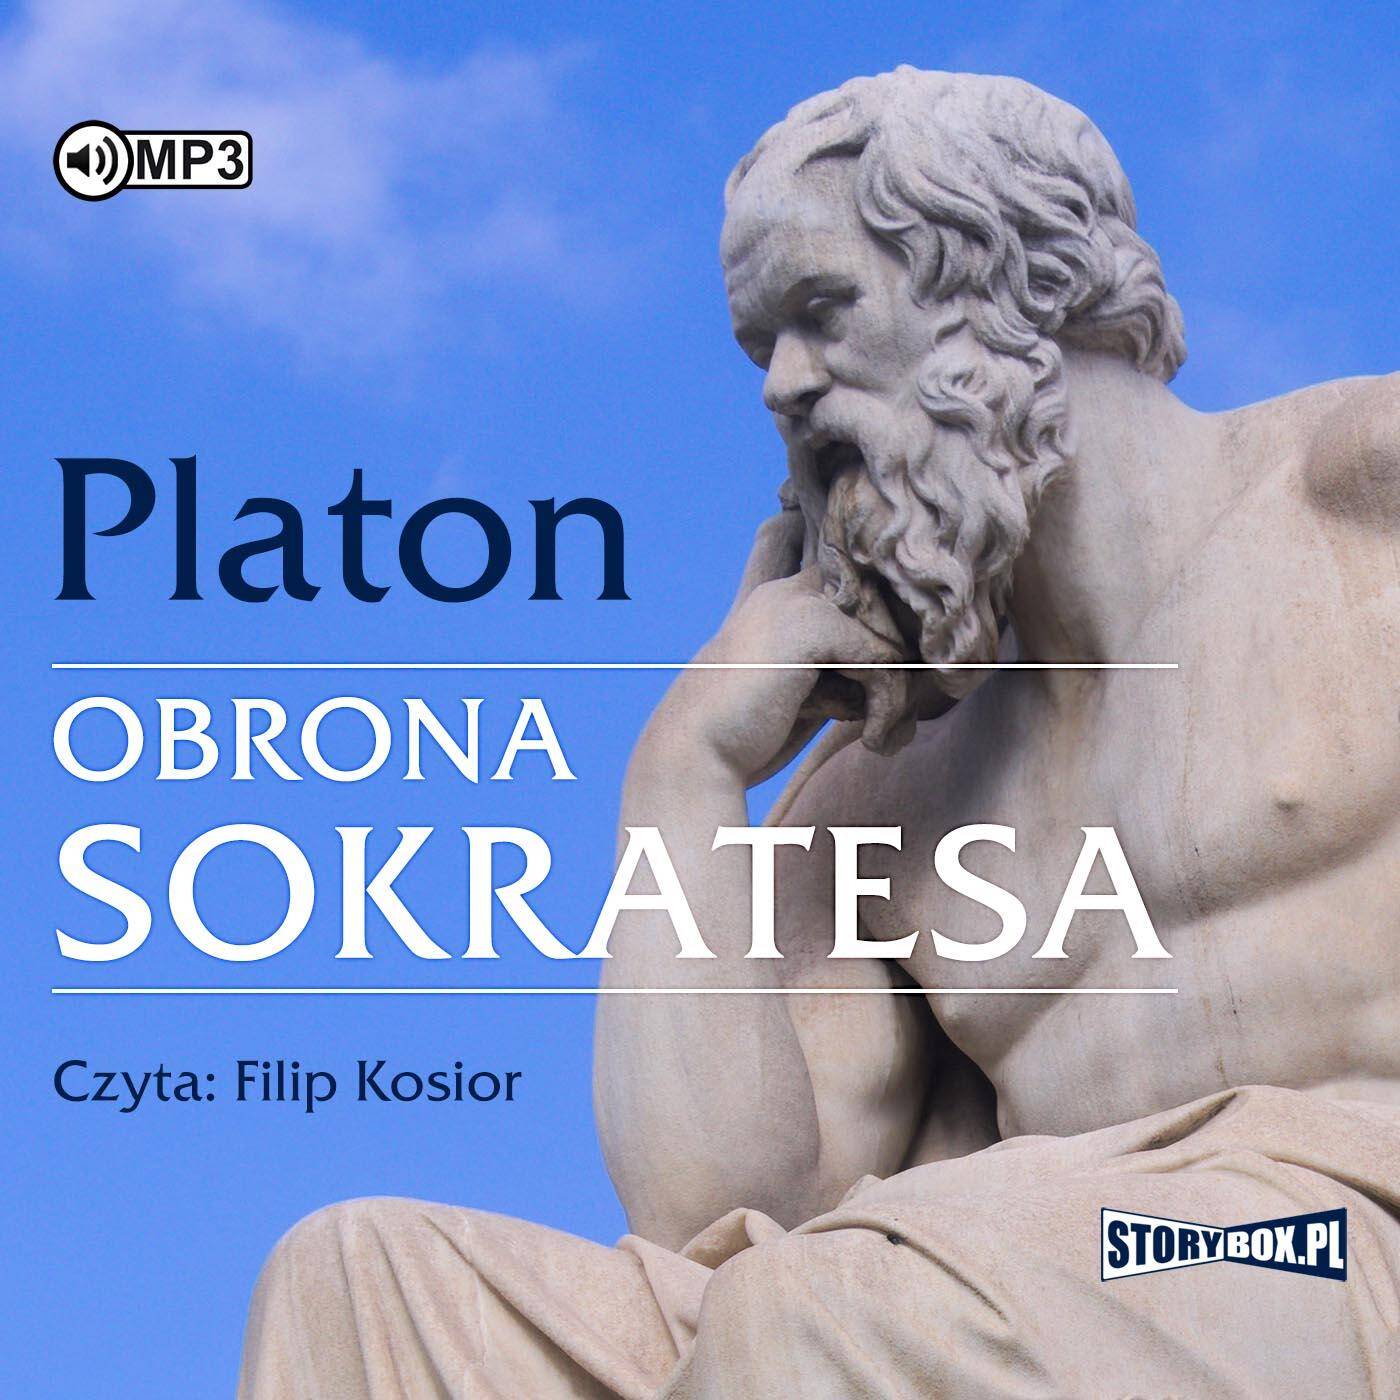 CD MP3 Obrona Sokratesa